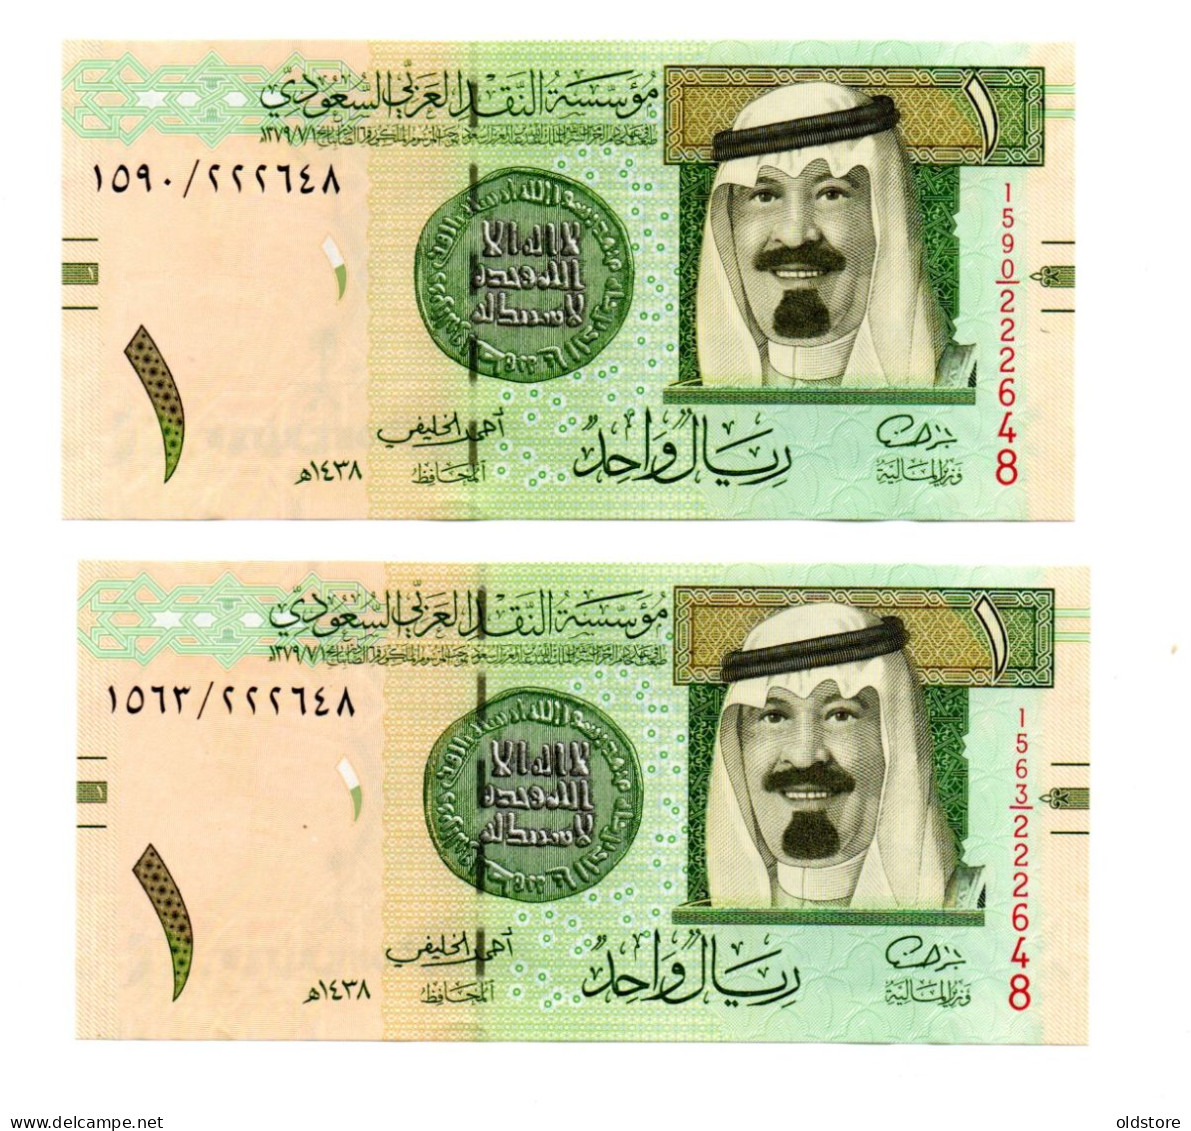 Saudi Arabia Banknotes - One Riyal 2016 - 2 Notes With Same Serial Number ( 222648) - UNC - Saudi-Arabien